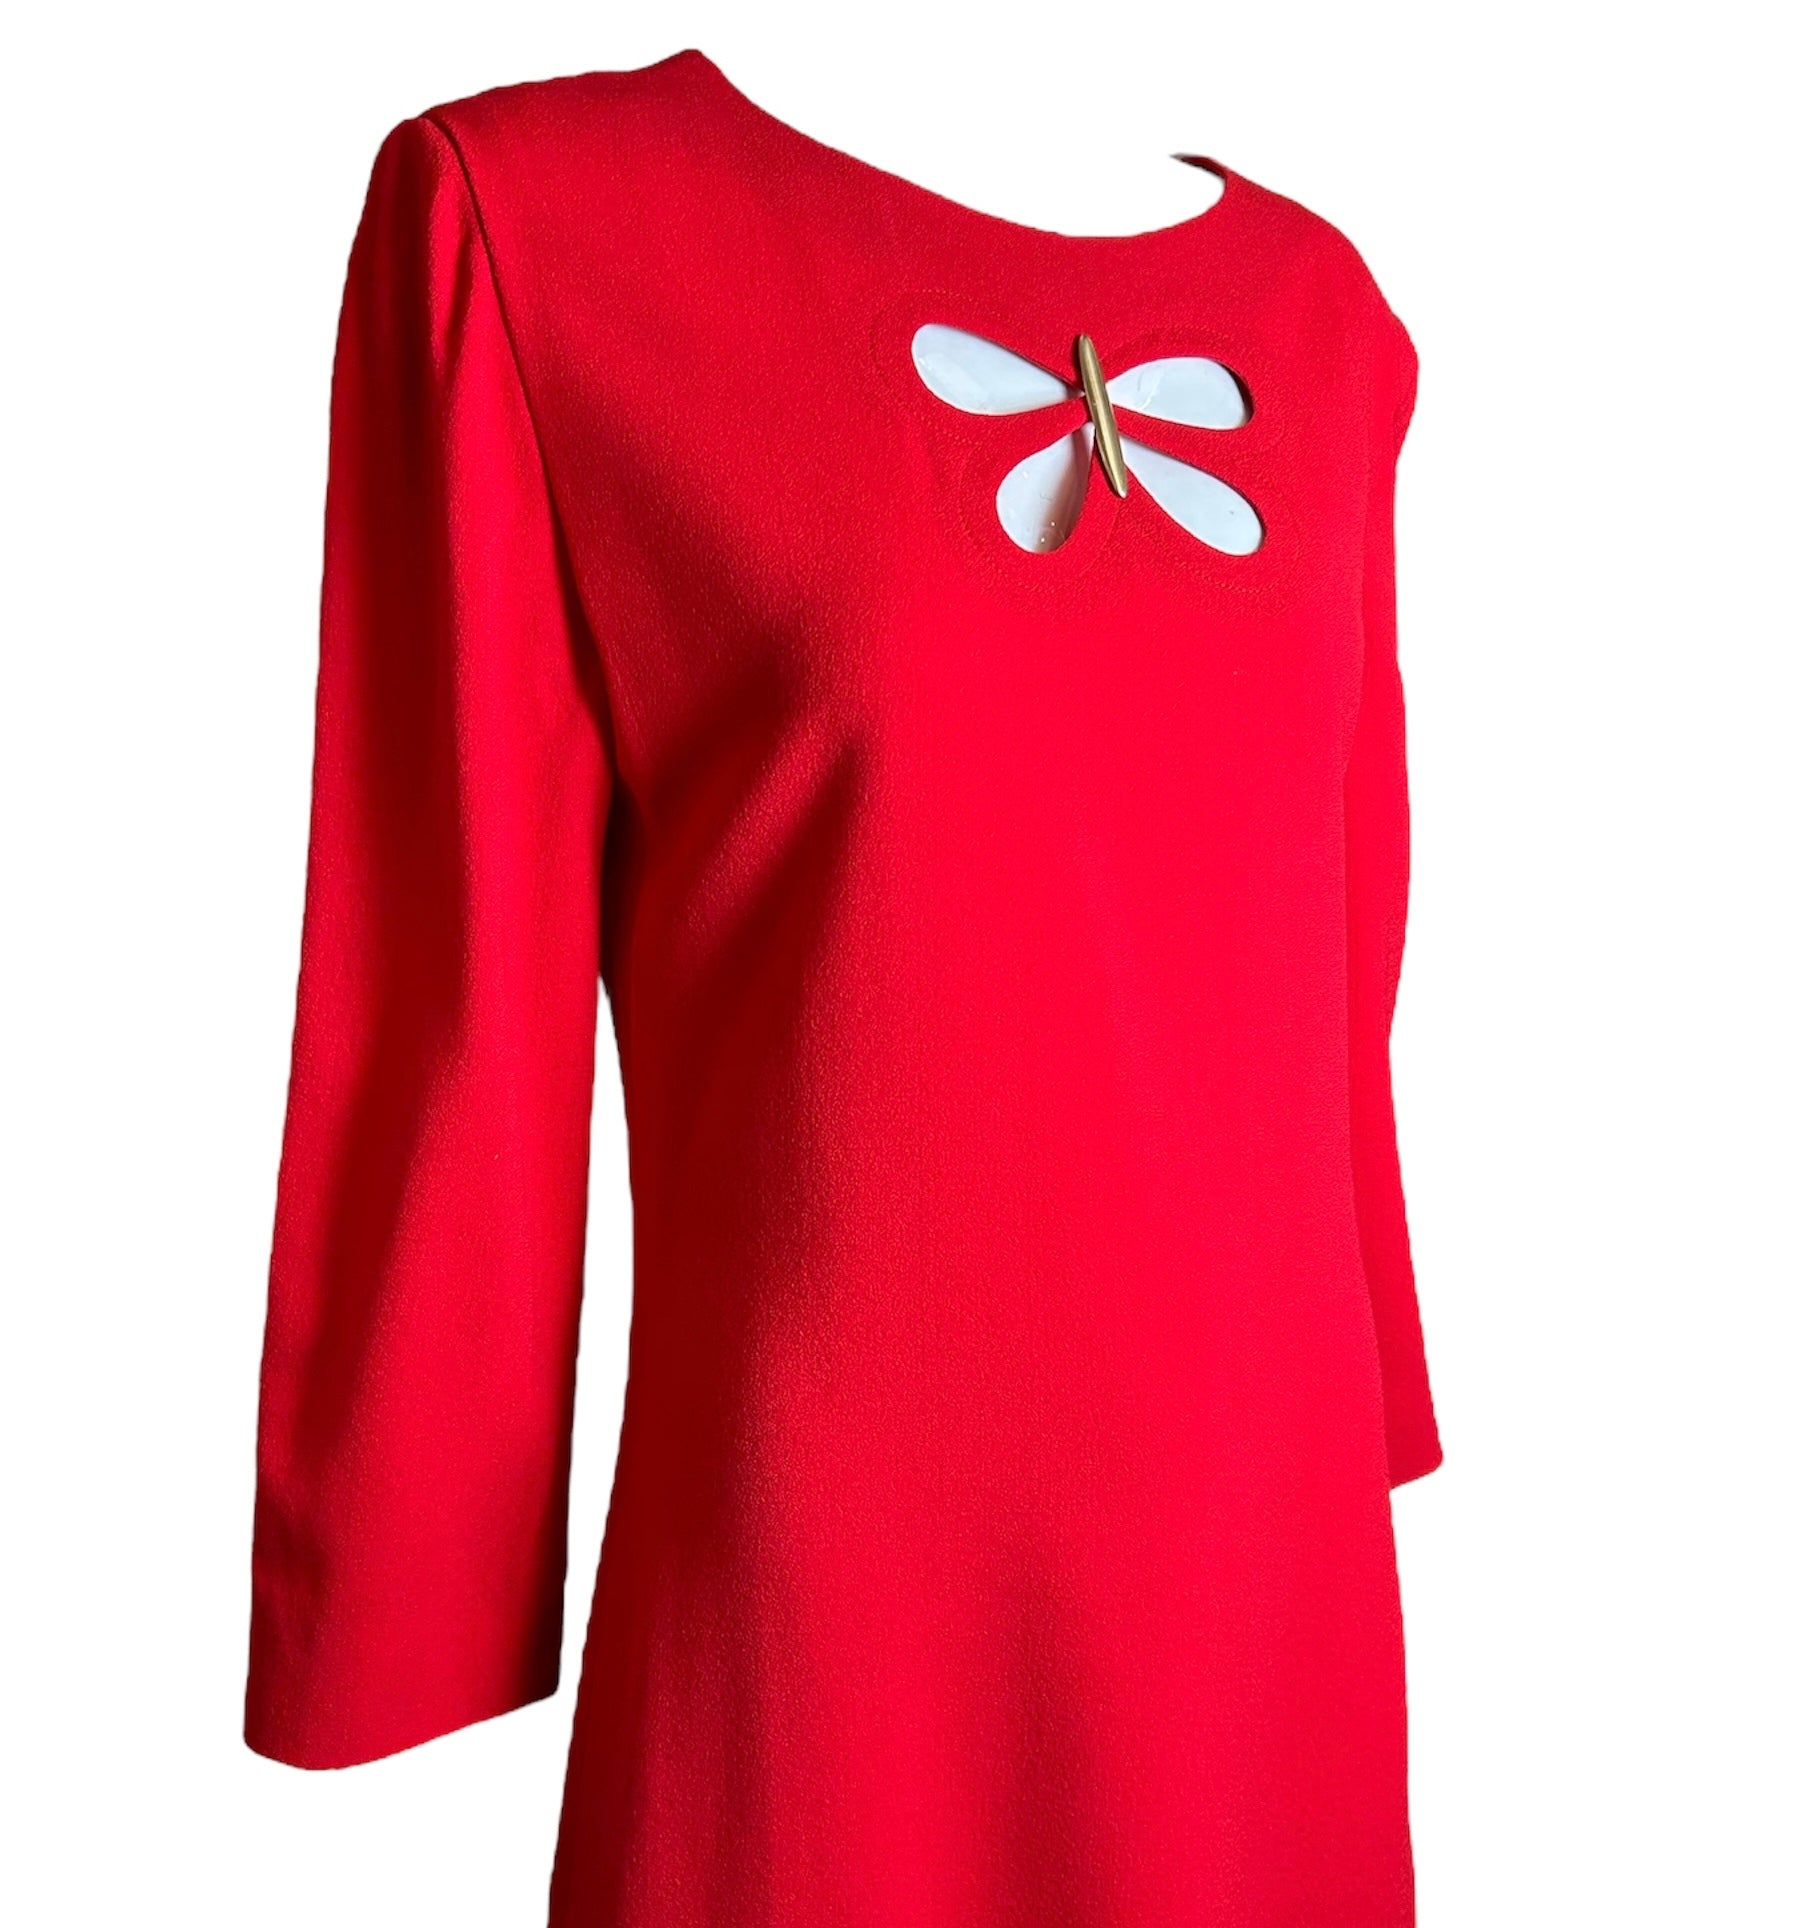 Pierre Cardin Red Mod Butterly Shift Dress DETAIL PHOTO 2 OF 5